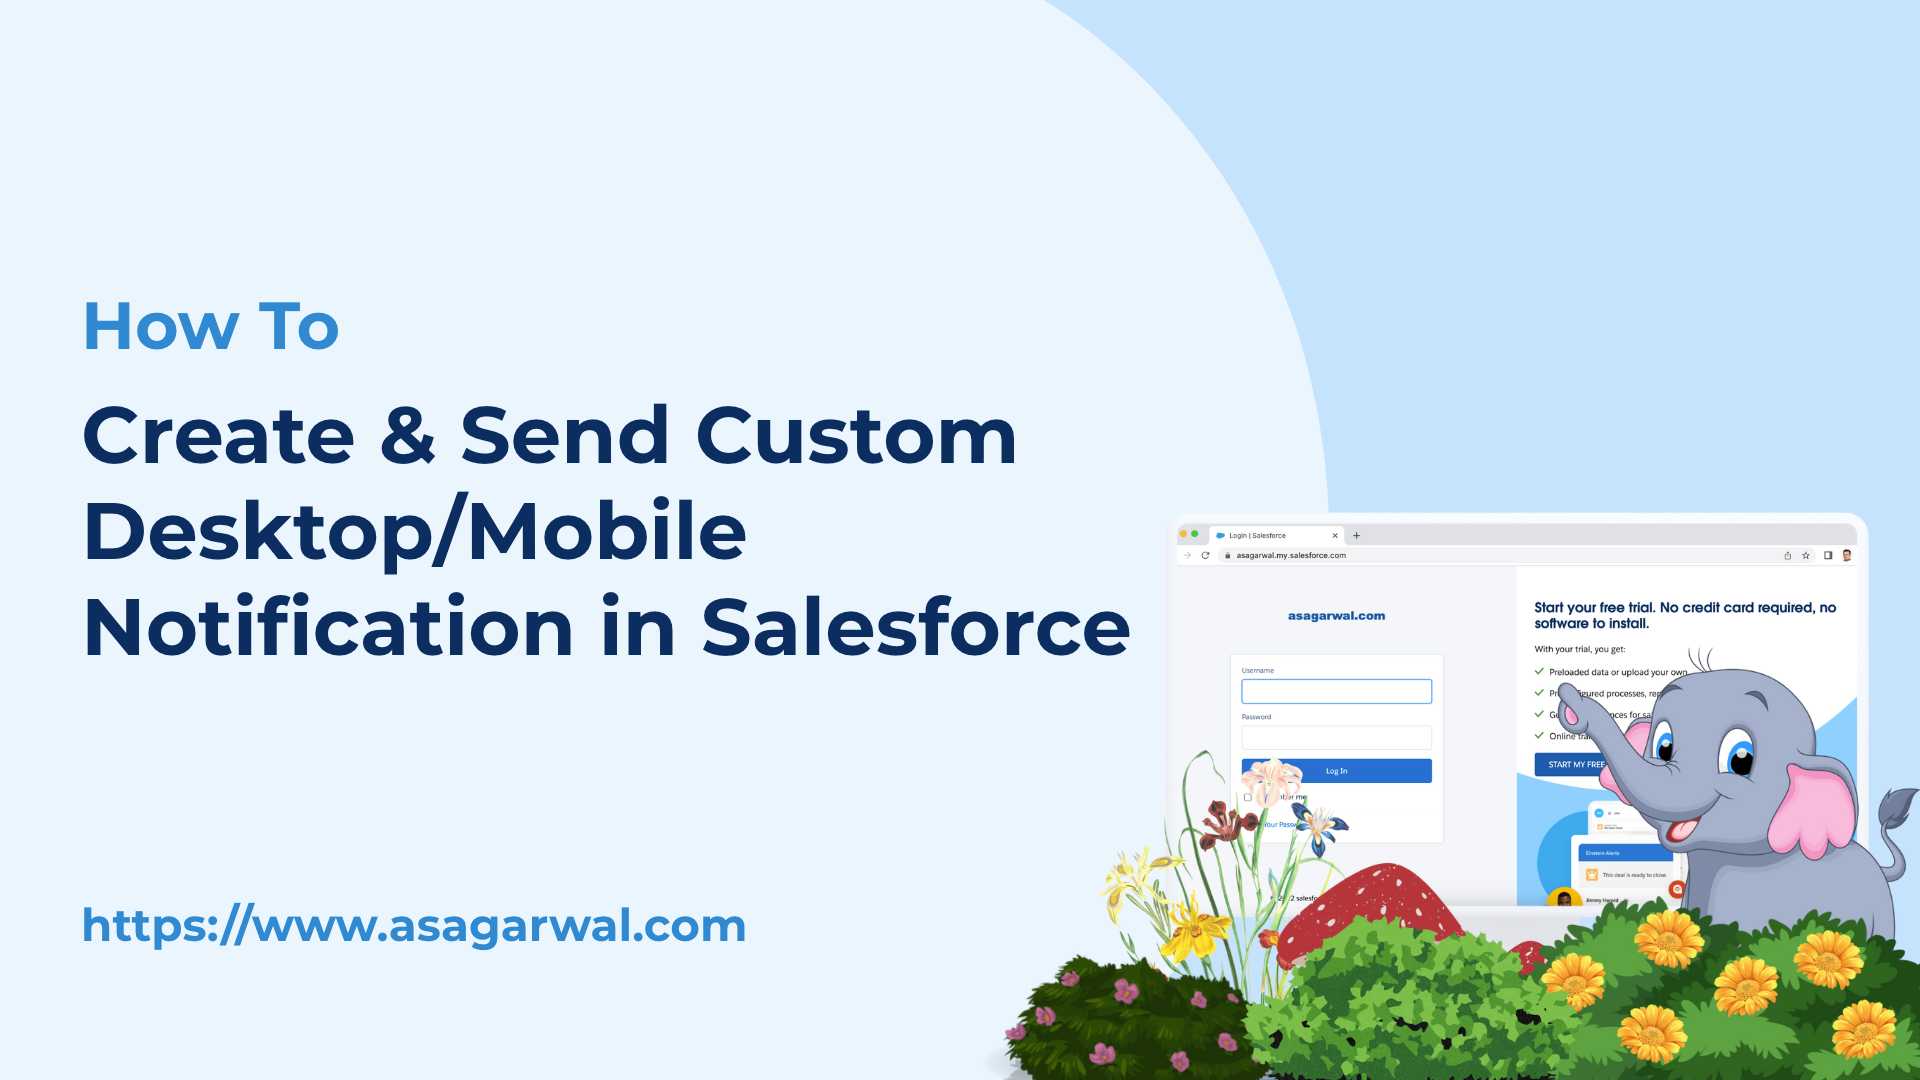 How To Create & Send Custom Desktop/Mobile Notification in Salesforce